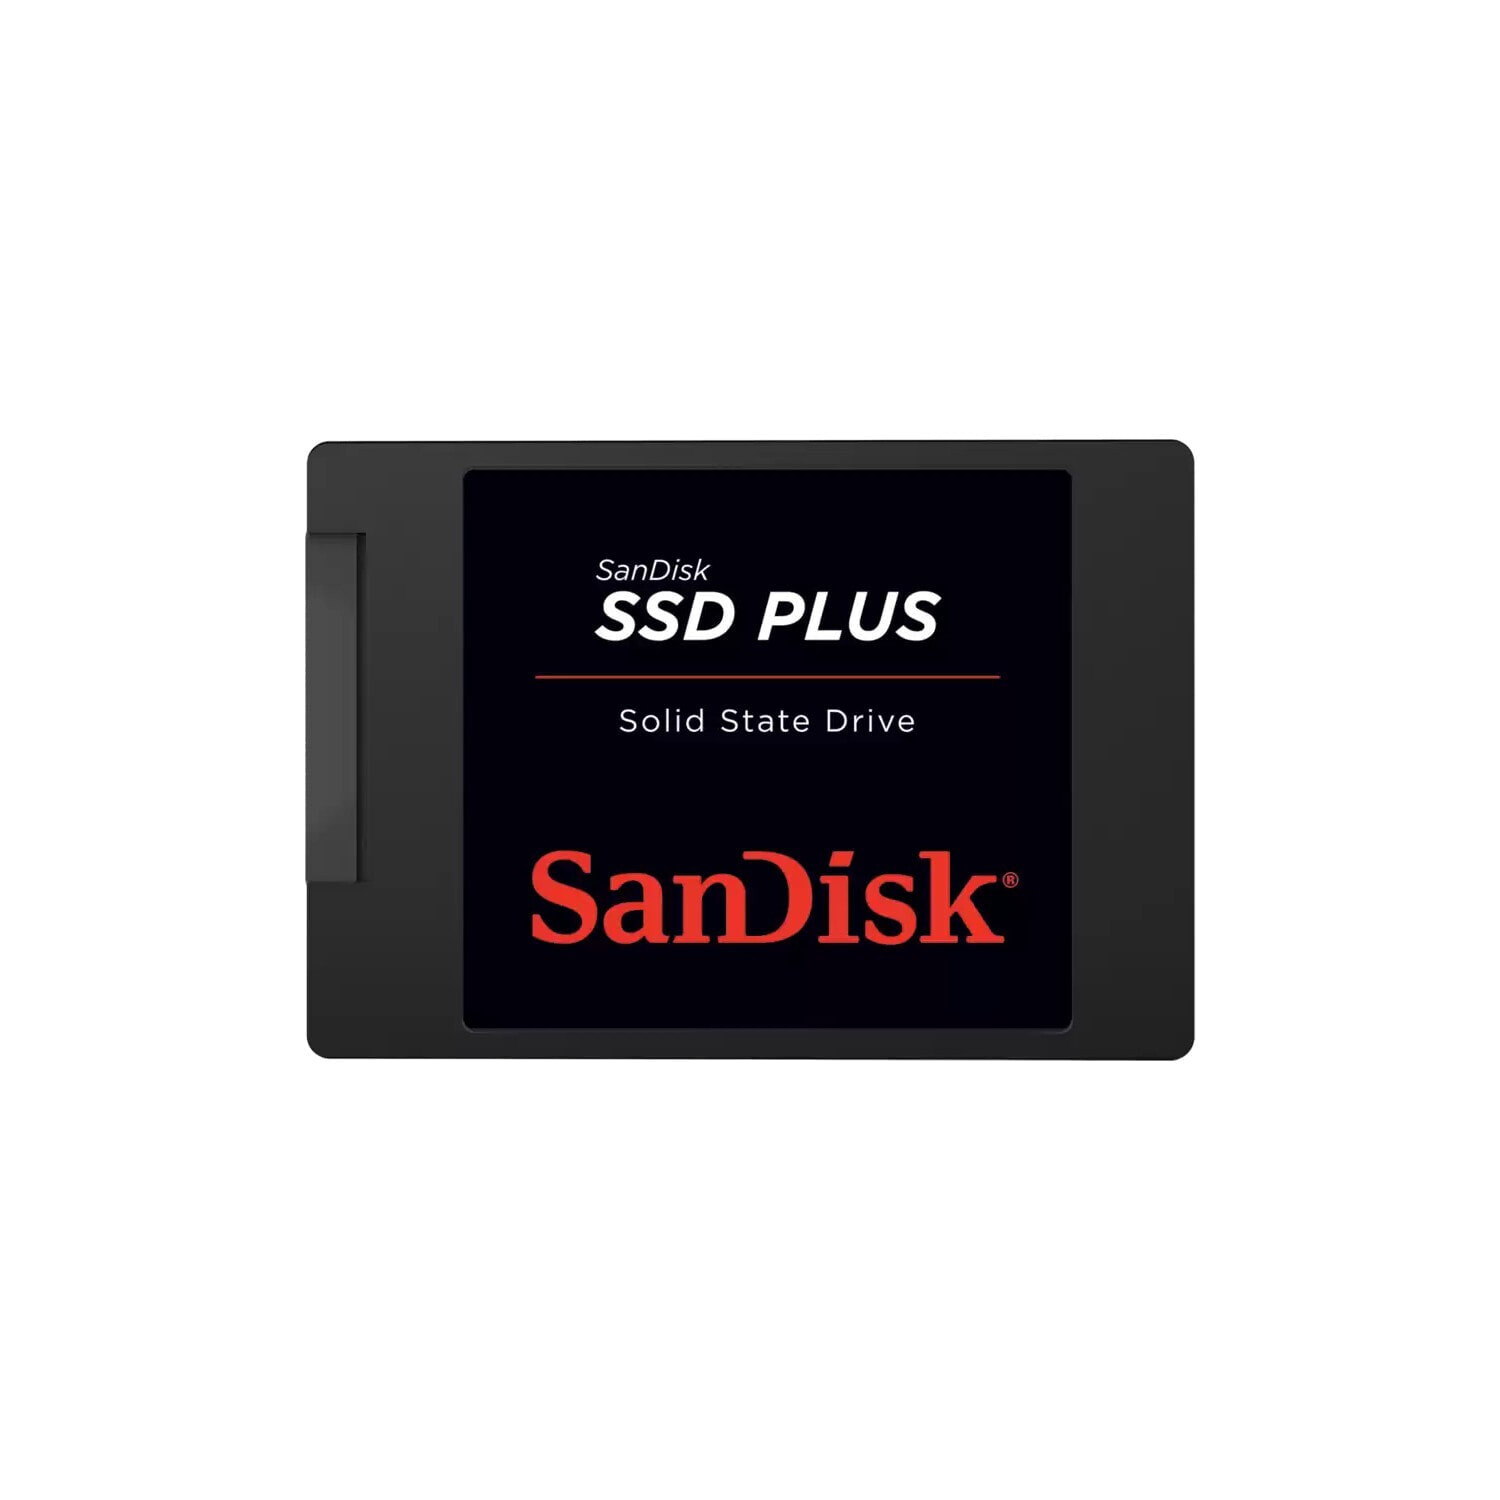 Sandisk SSD Plus 1tb 535MB/S 350MB/S Sata 3 2.5